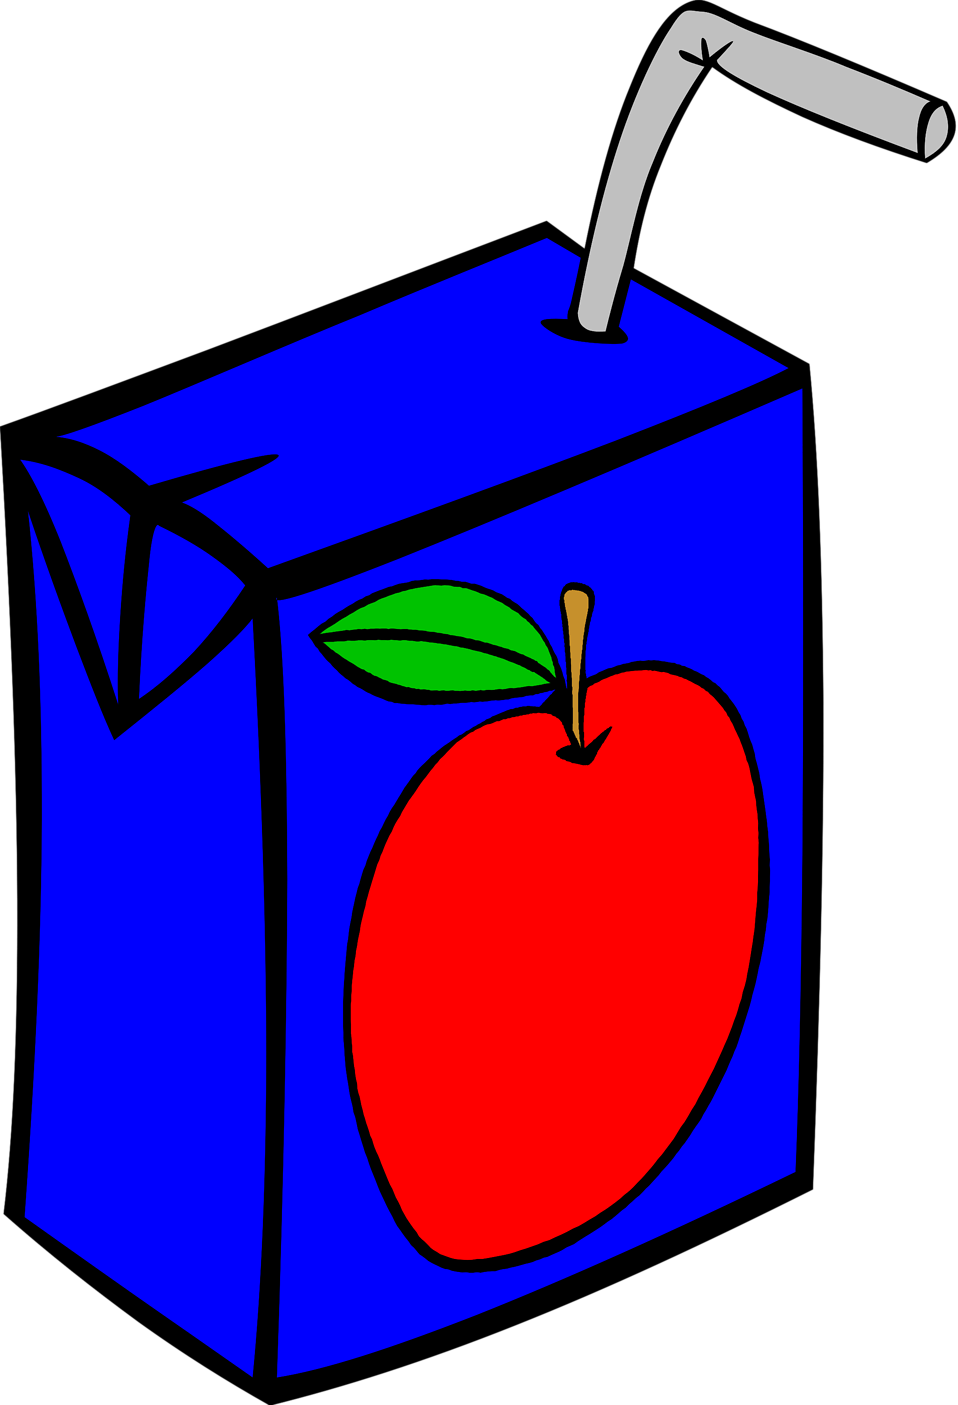 Apple Juice | Free Stock Photo | Illustration of a small apple ...